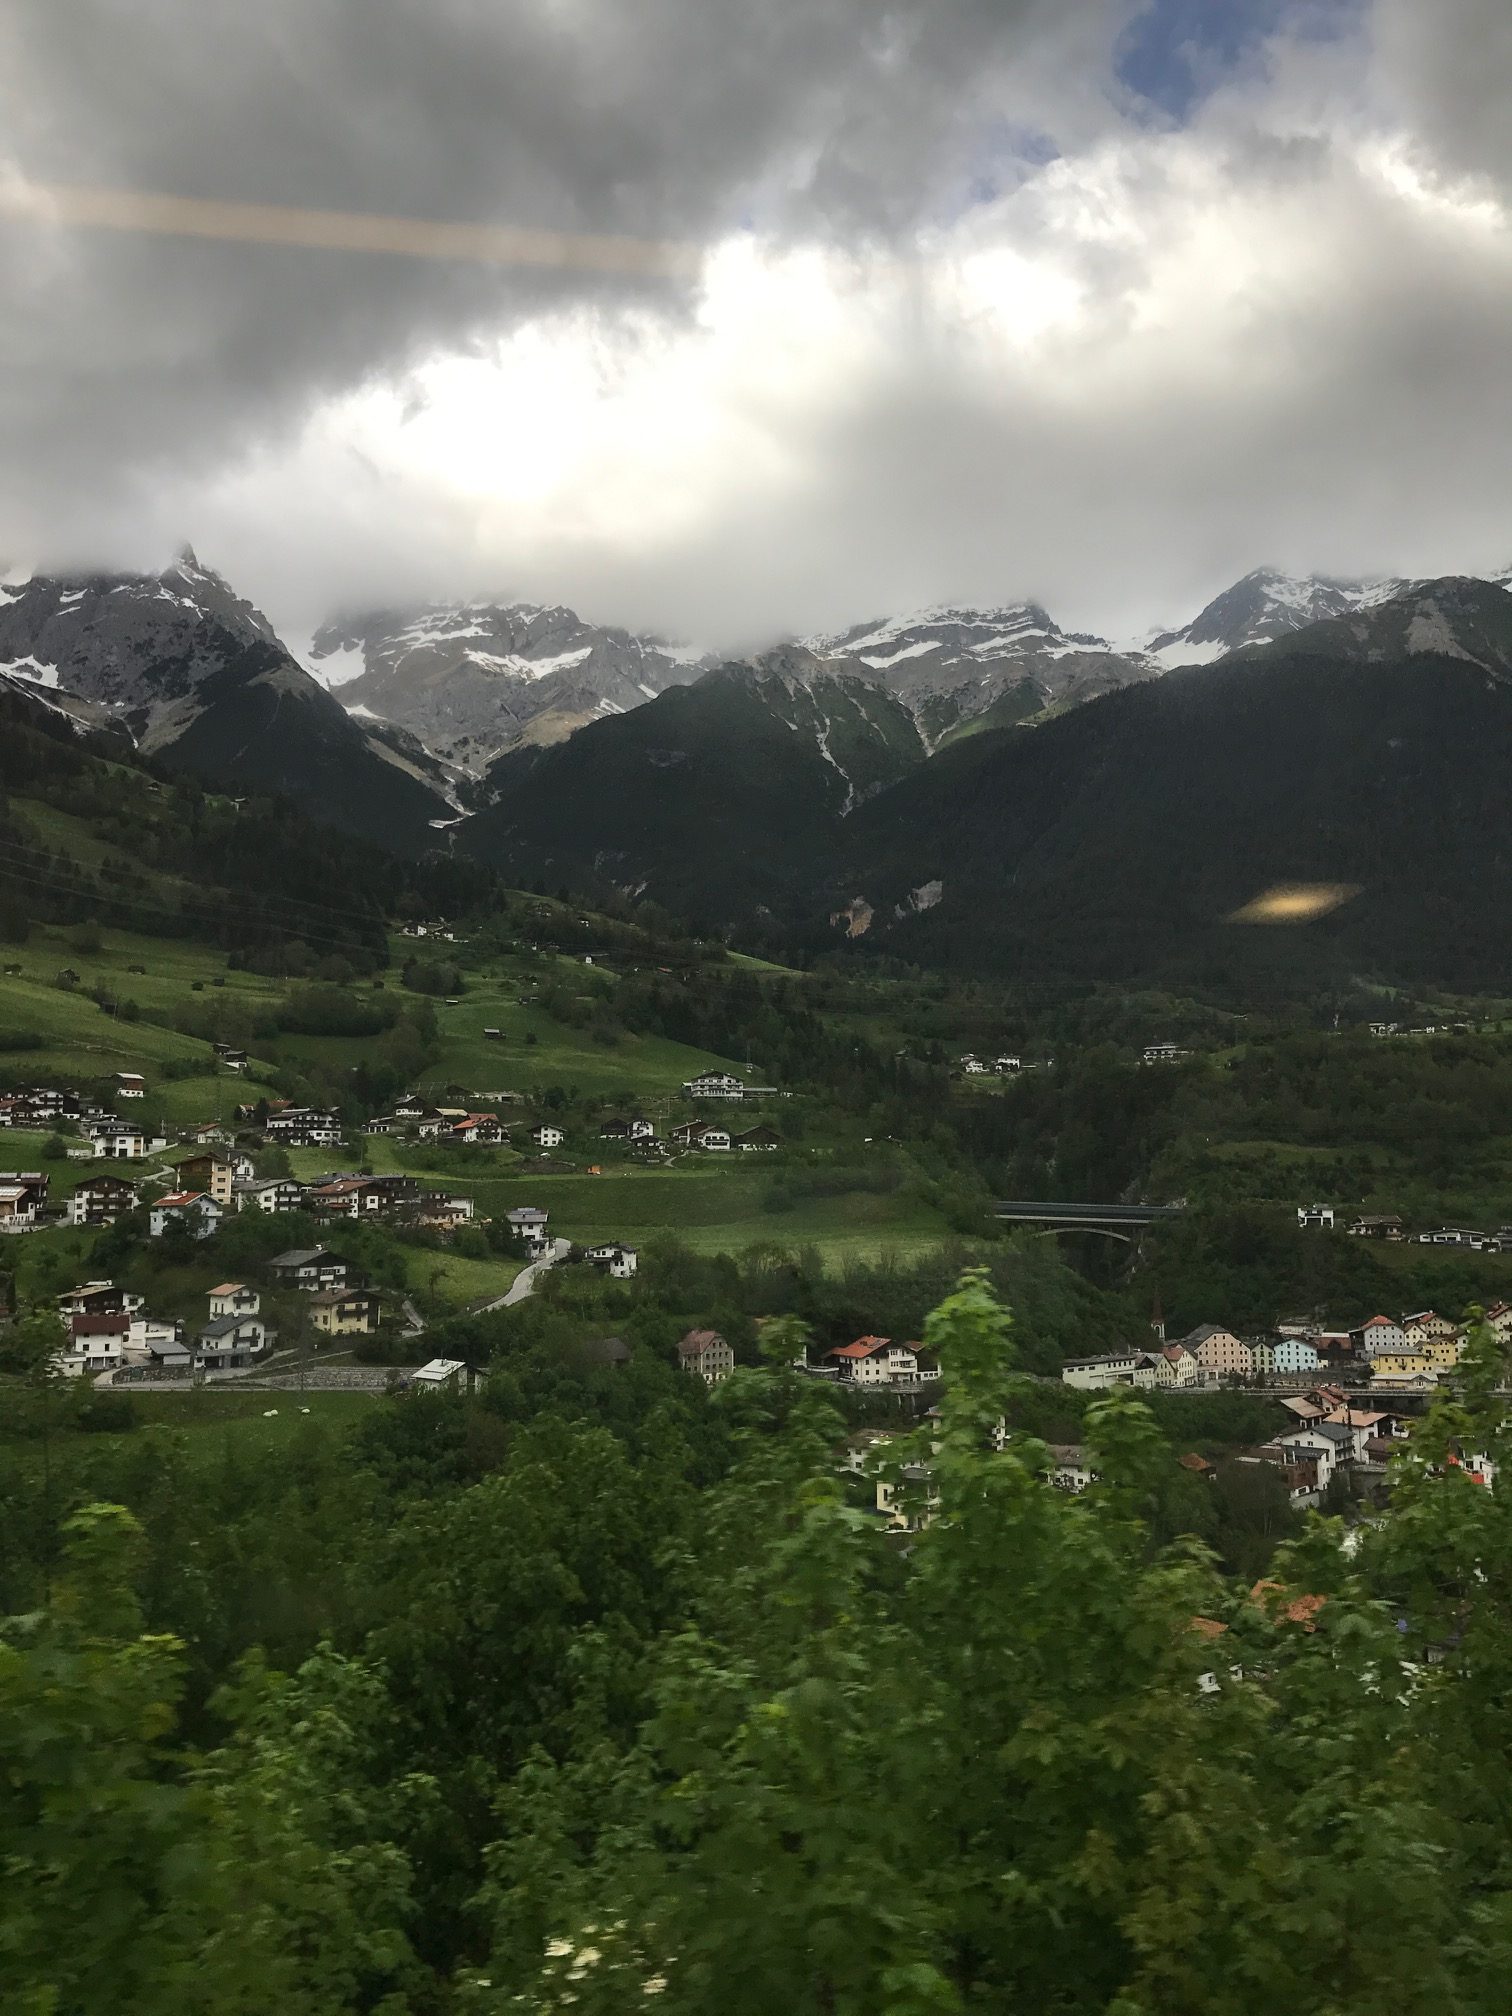 Salzburg: Glorious Alpine scenery.